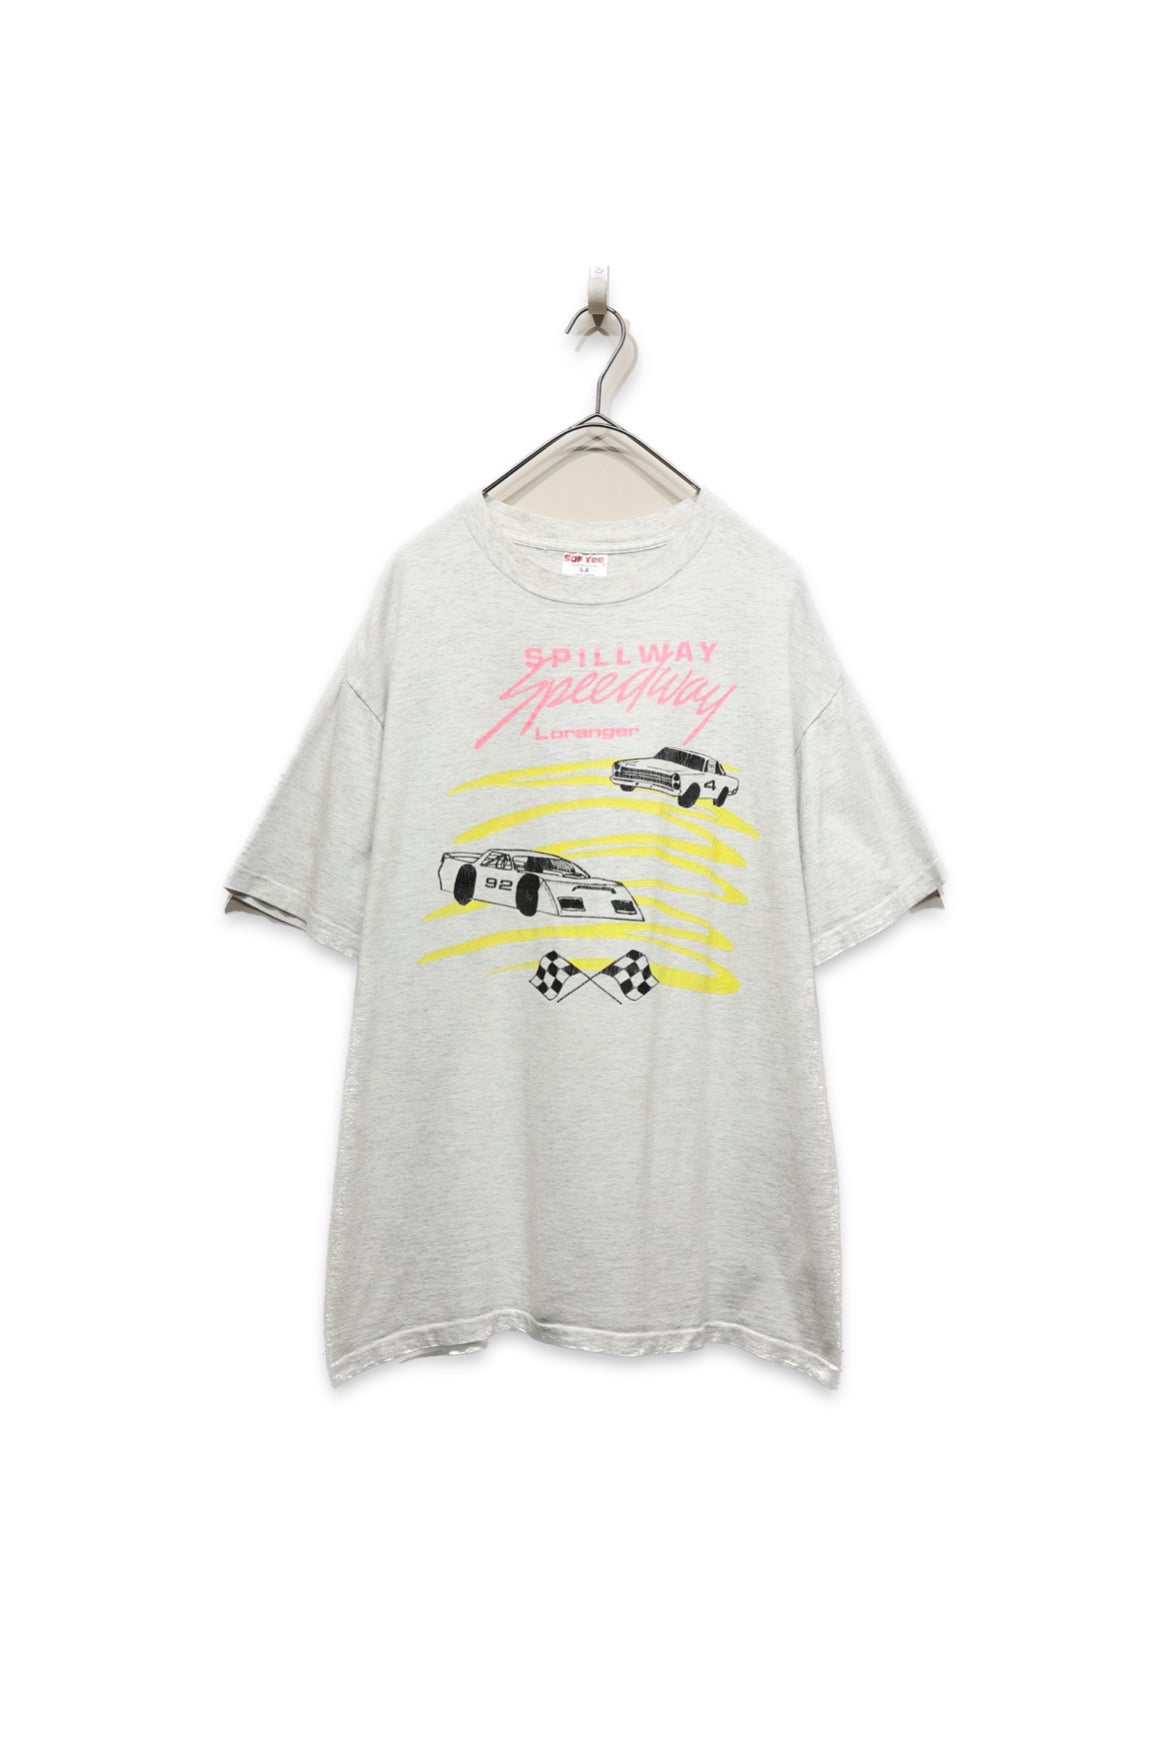 1980-90’s Printed T-Shirt